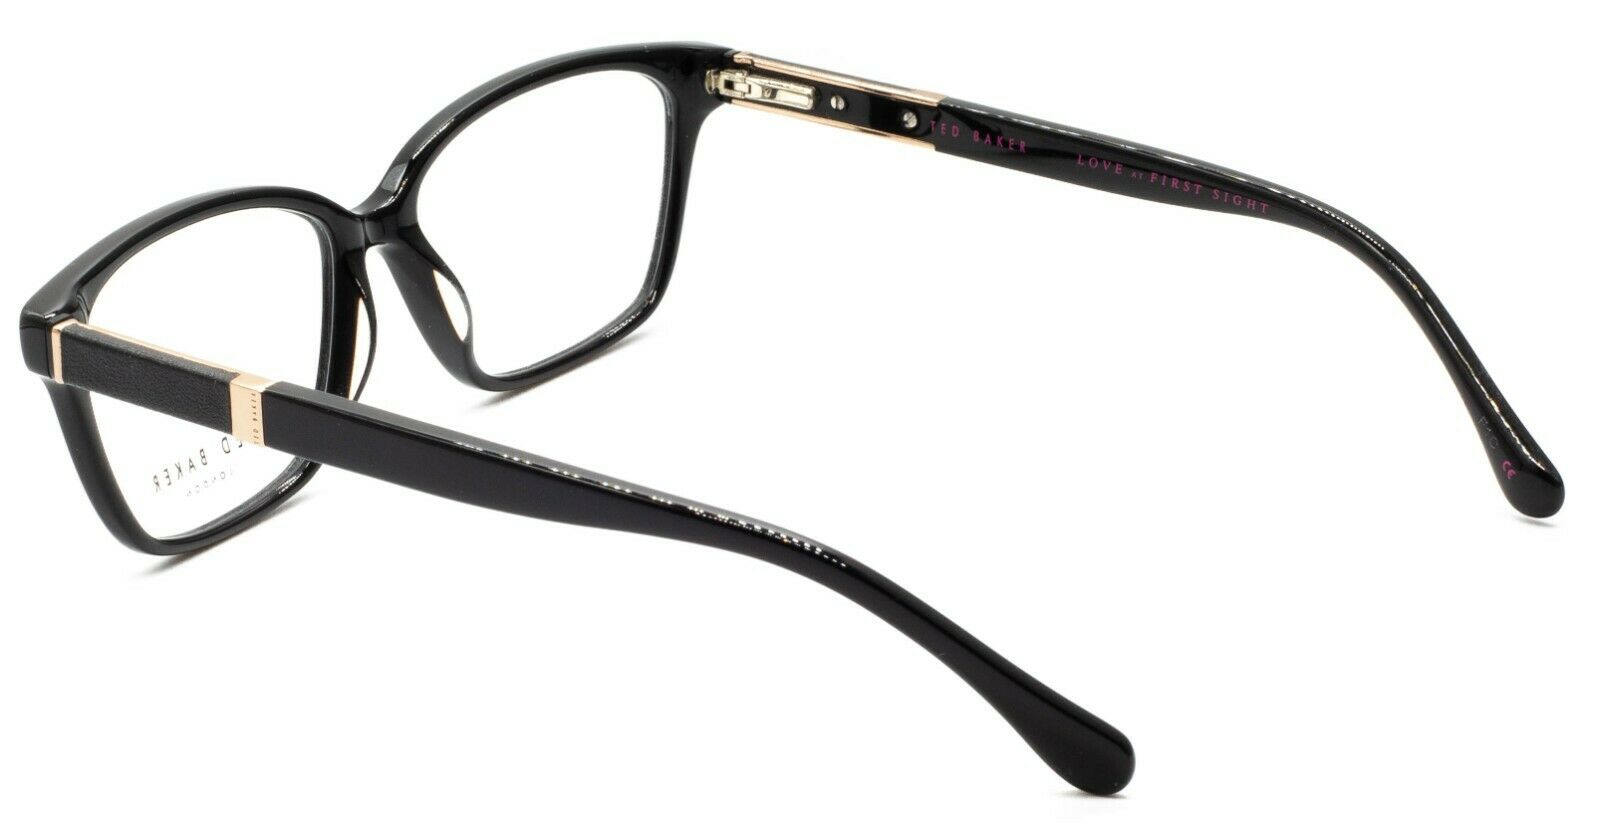 TED BAKER TB 9118 001 Dio 54mm Eyewear FRAMES Glasses Eyeglasses RX Optical -New